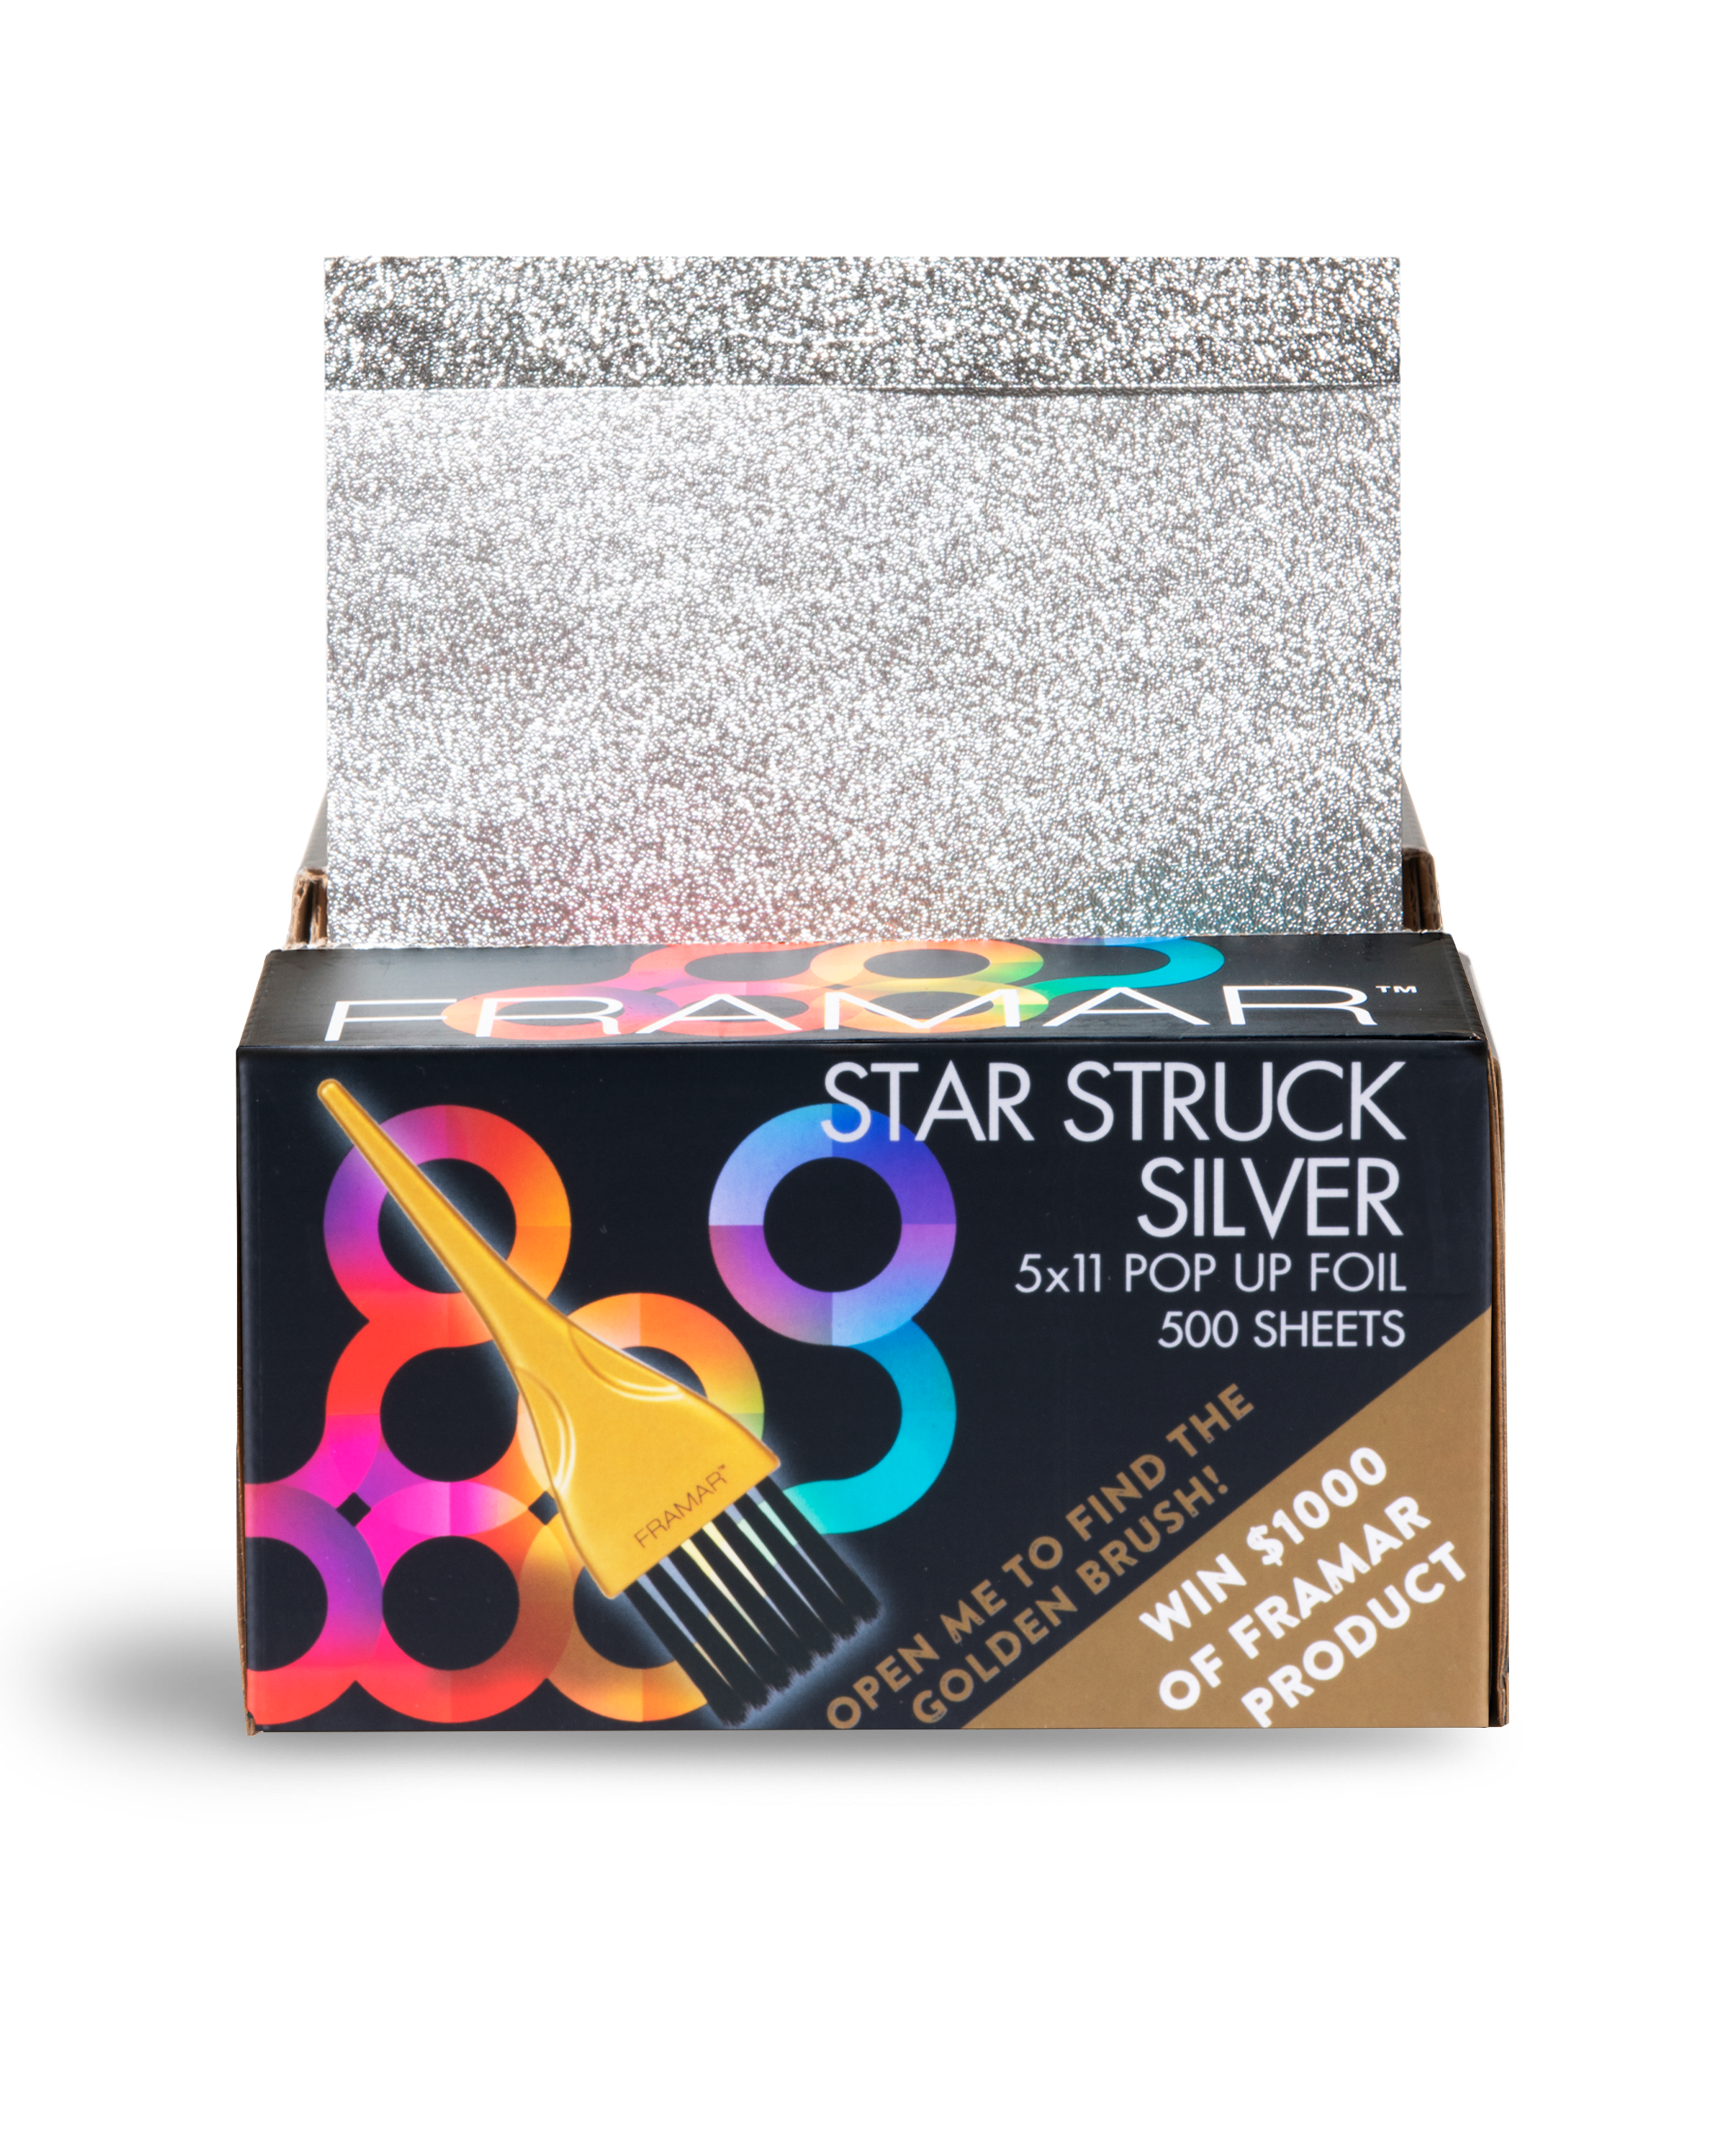 Framar Pop Up Foil - Star Struck Silver *Golden Brush Contest* - Creata Beauty - Professional Beauty Products